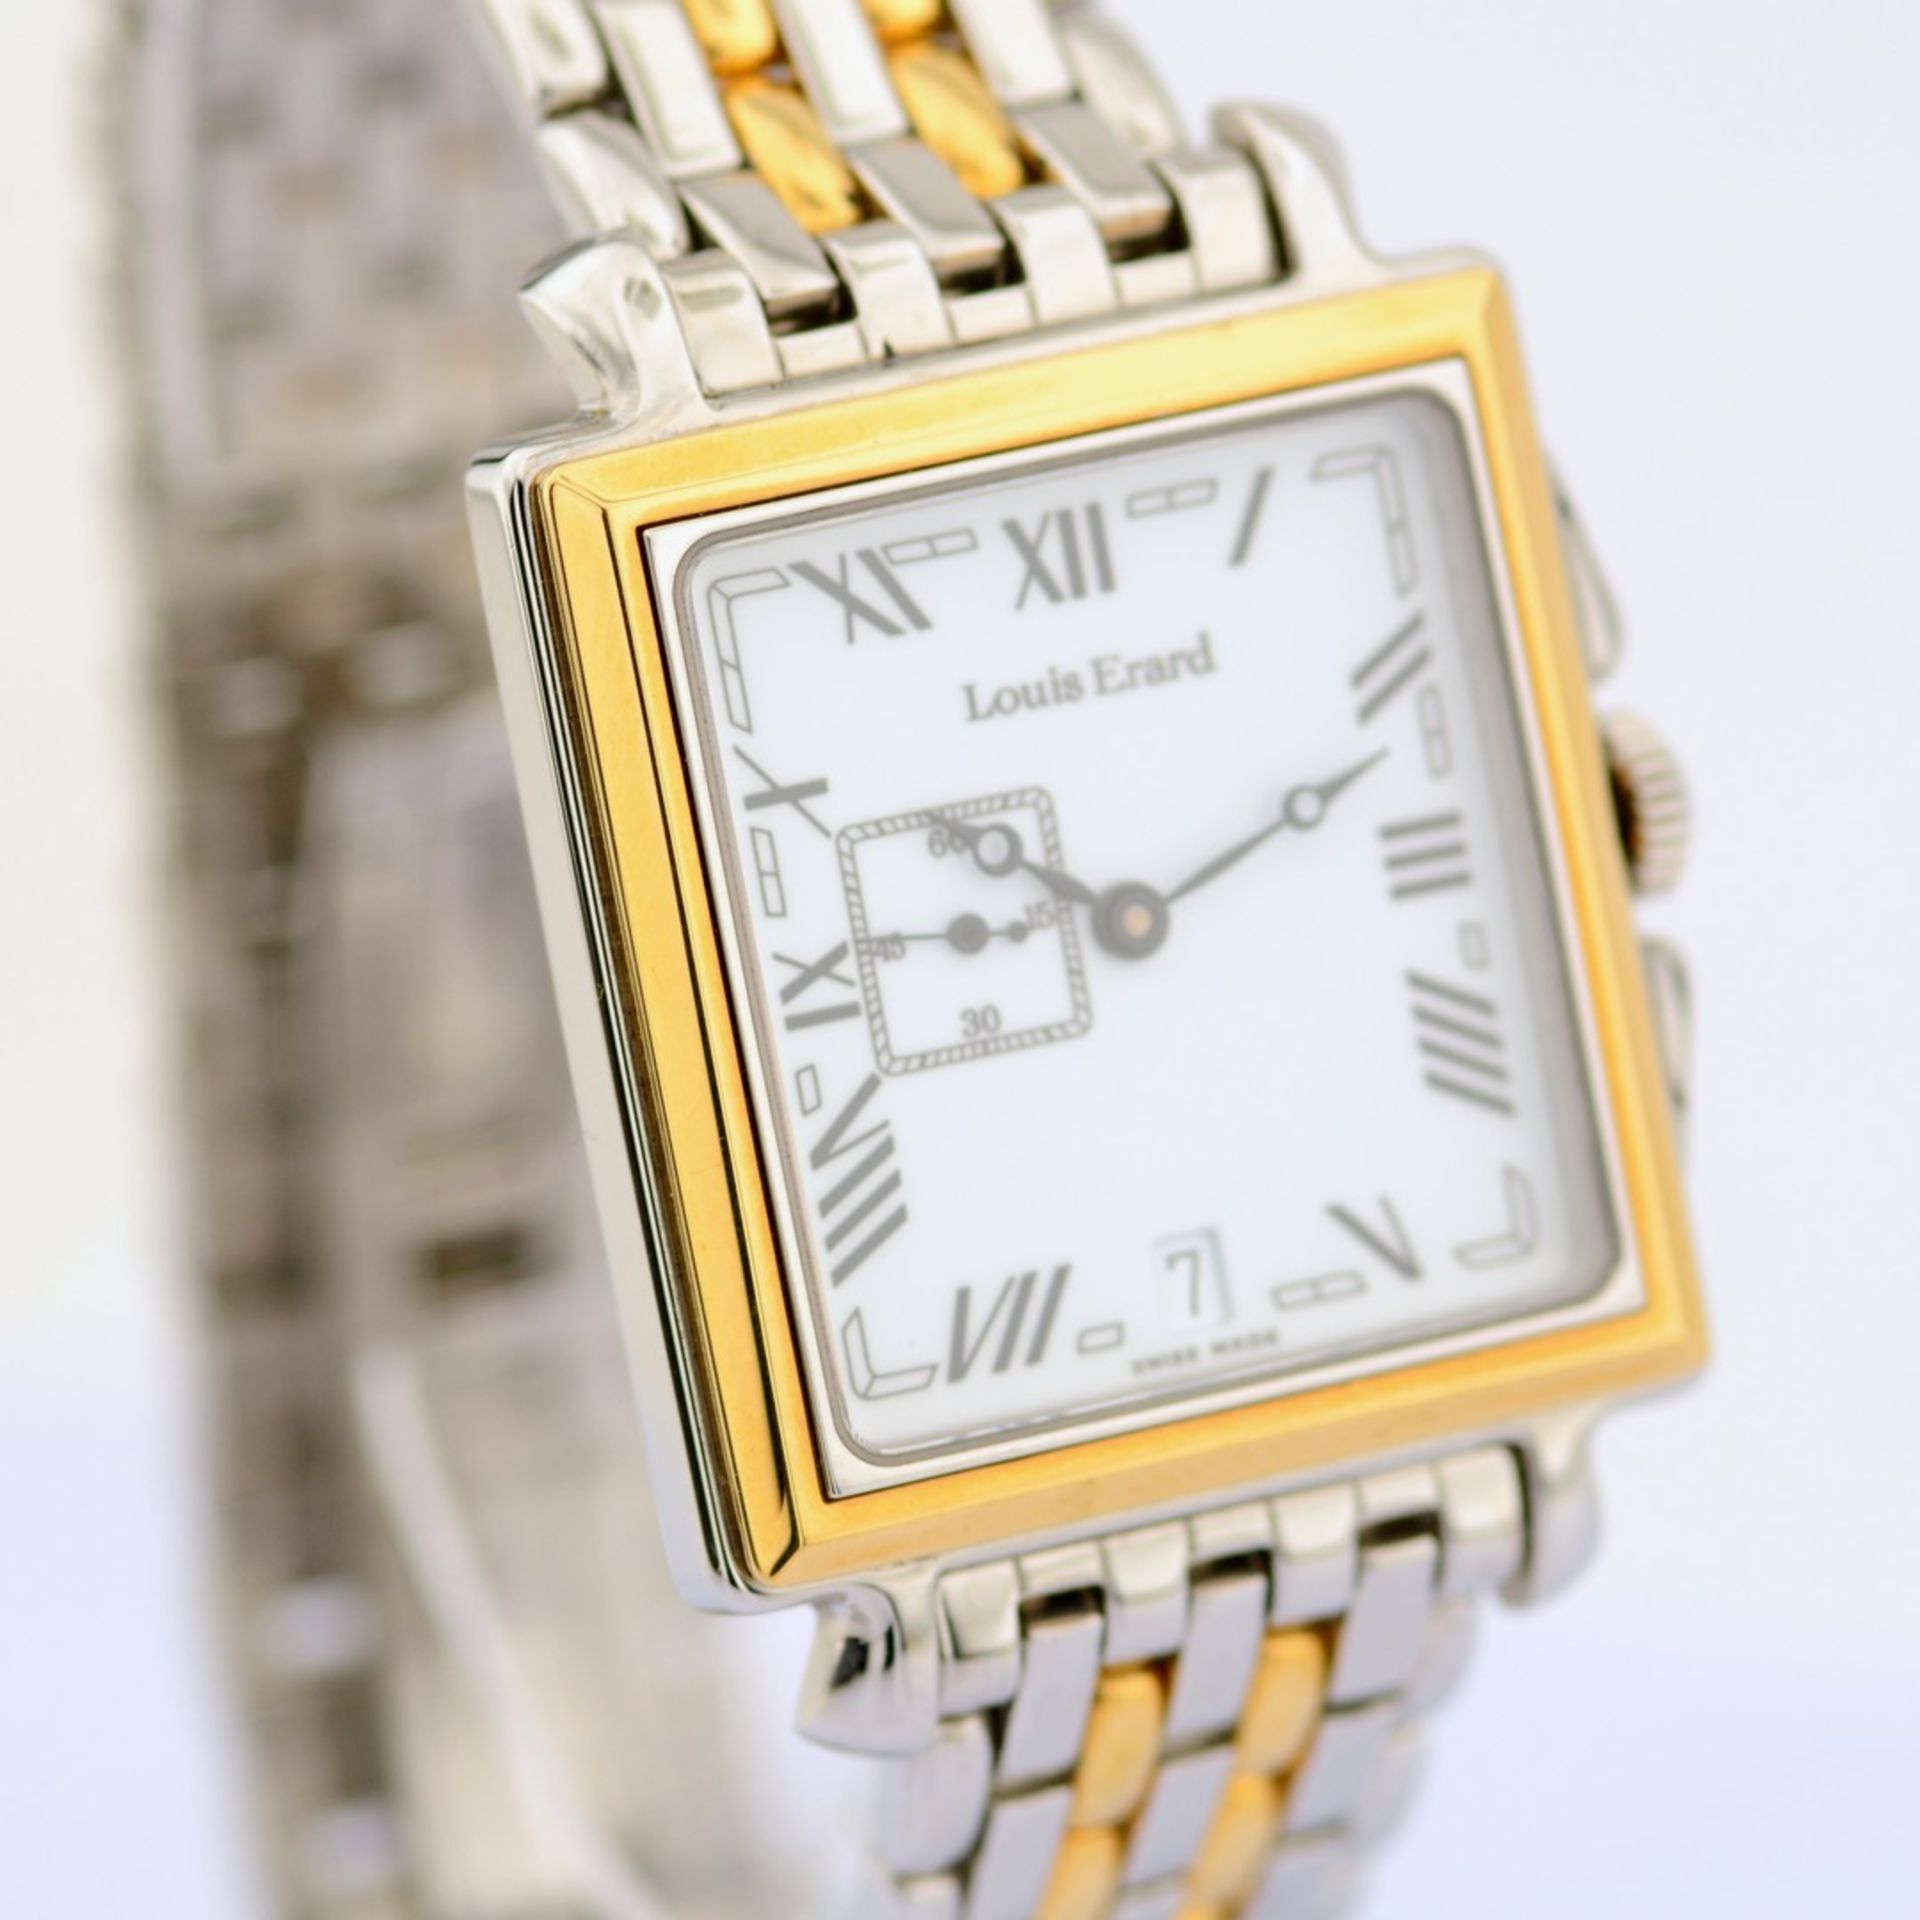 Louis Erard / Automatic Date - Gentlemen's Steel Wristwatch - Image 6 of 8